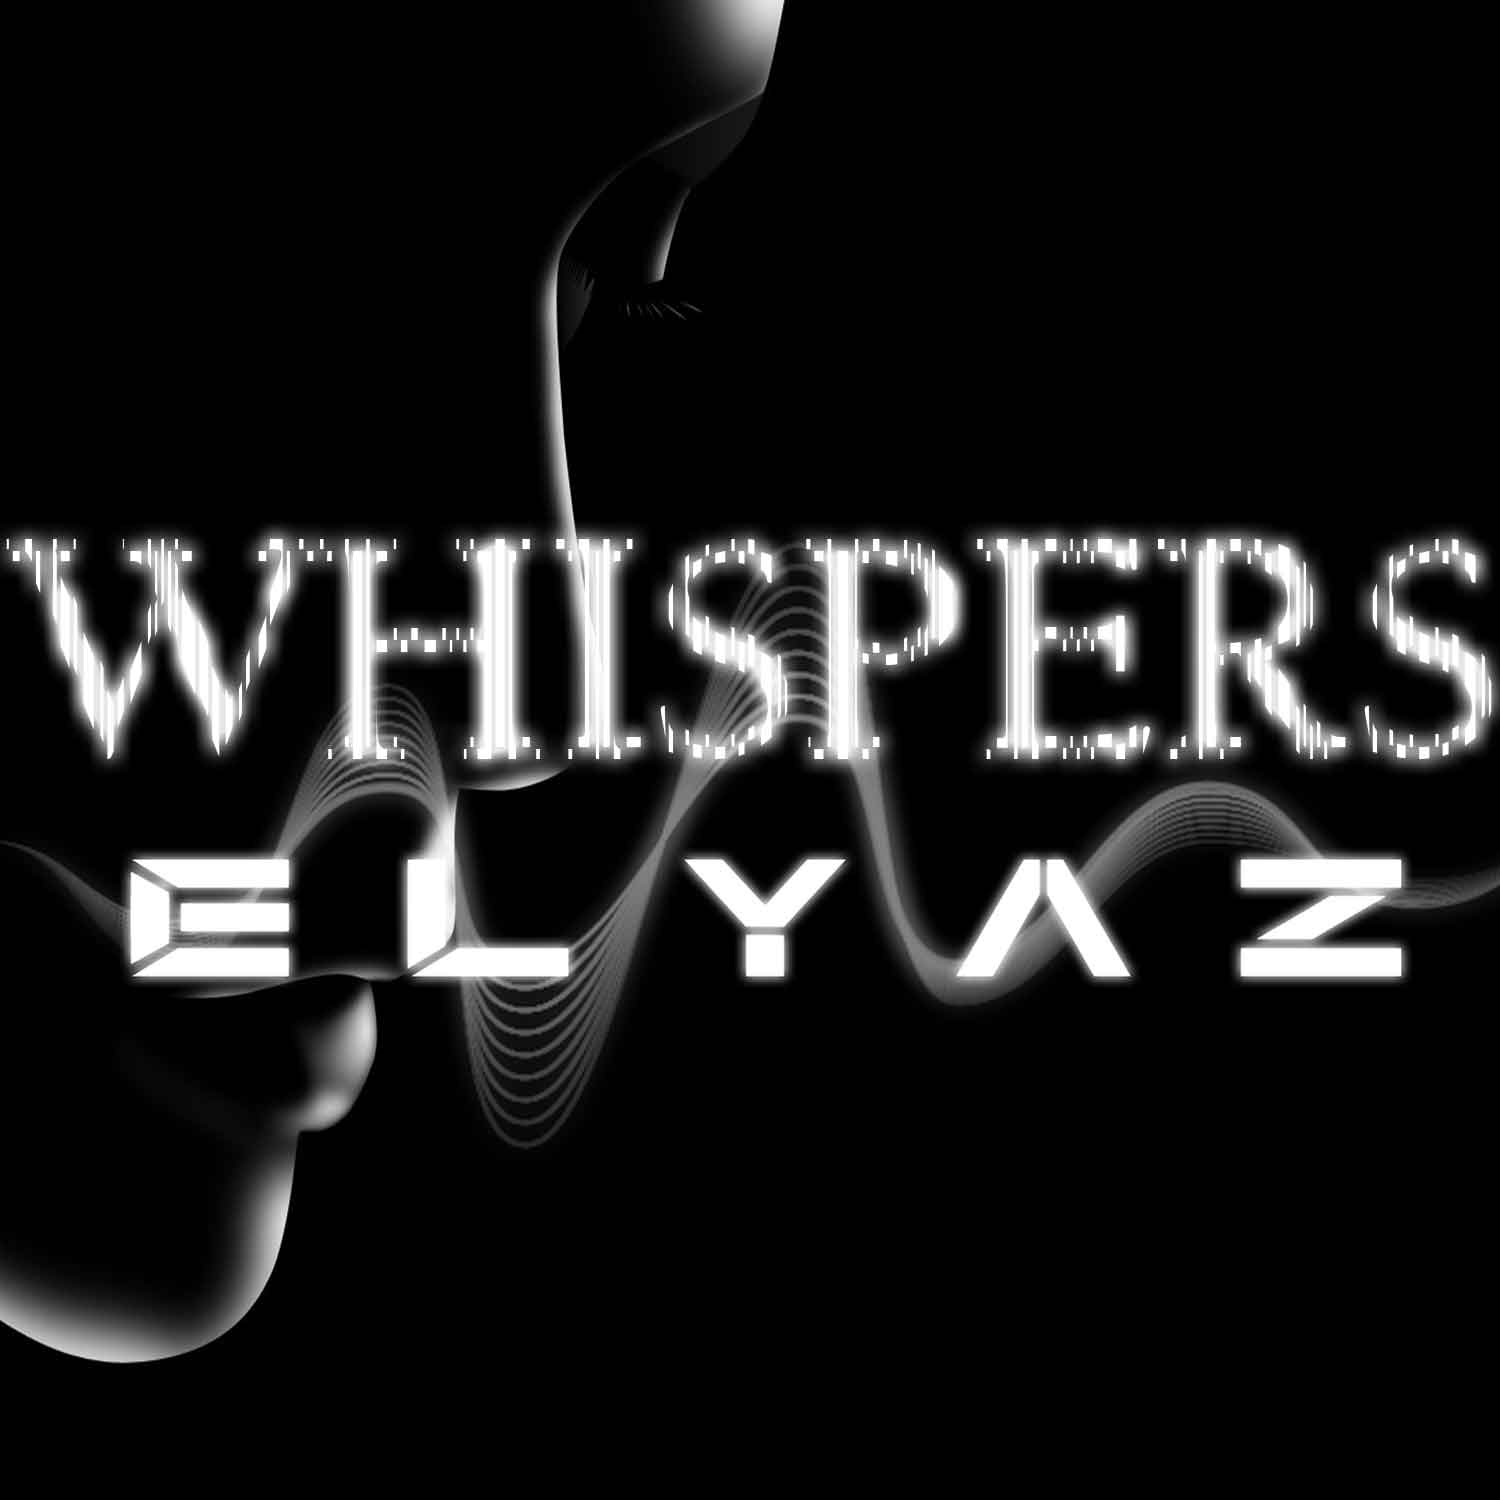 ELYAZ - Whispers